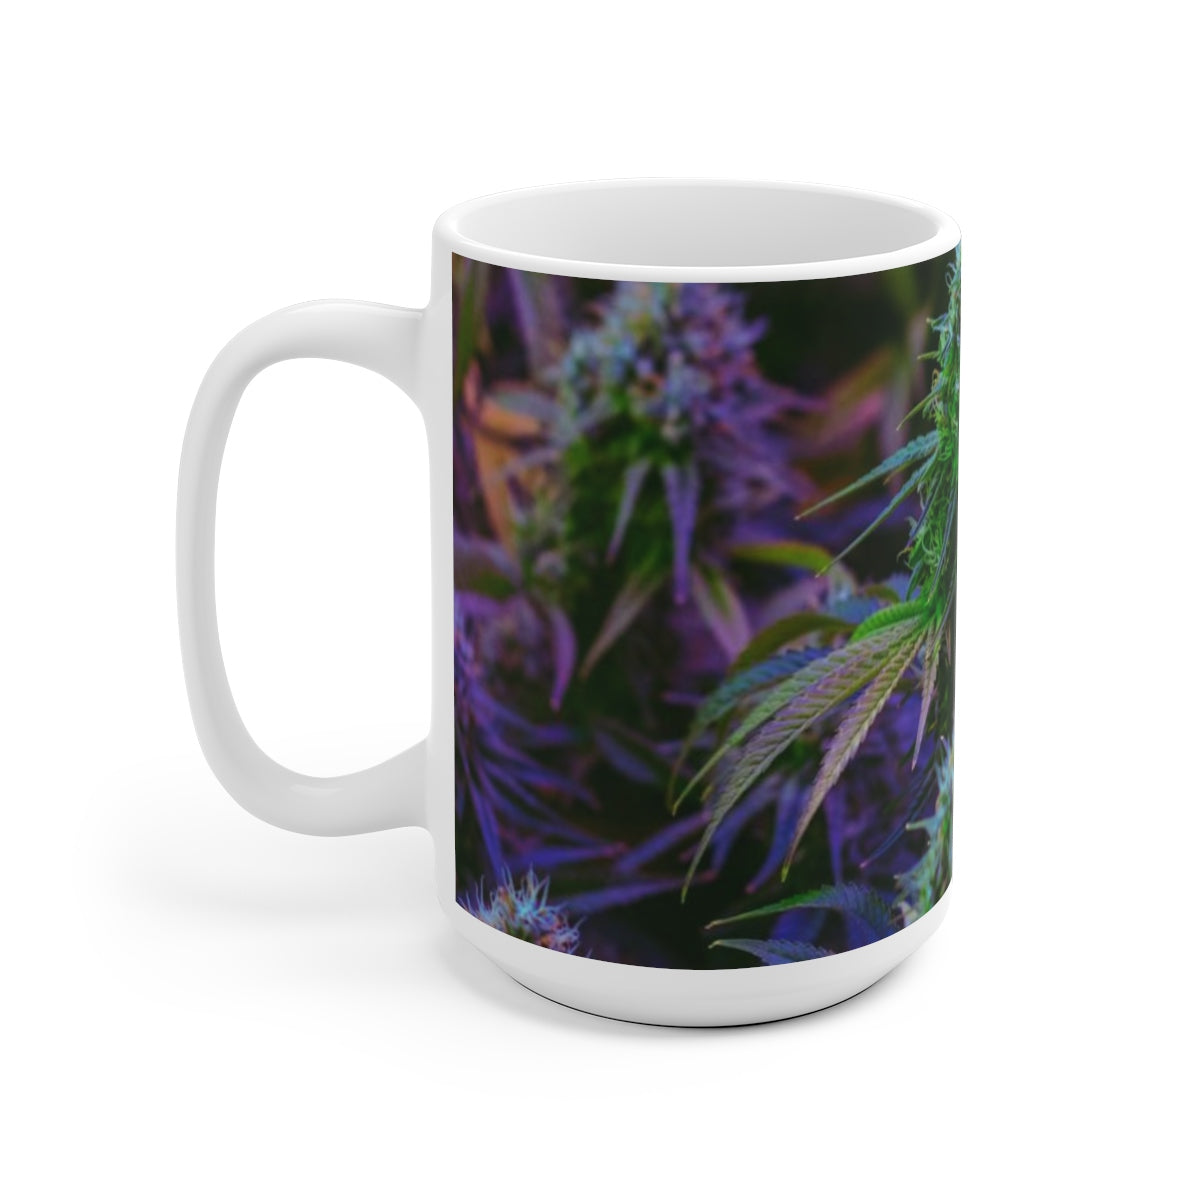 The Purple Cannabis White Ceramic Mug